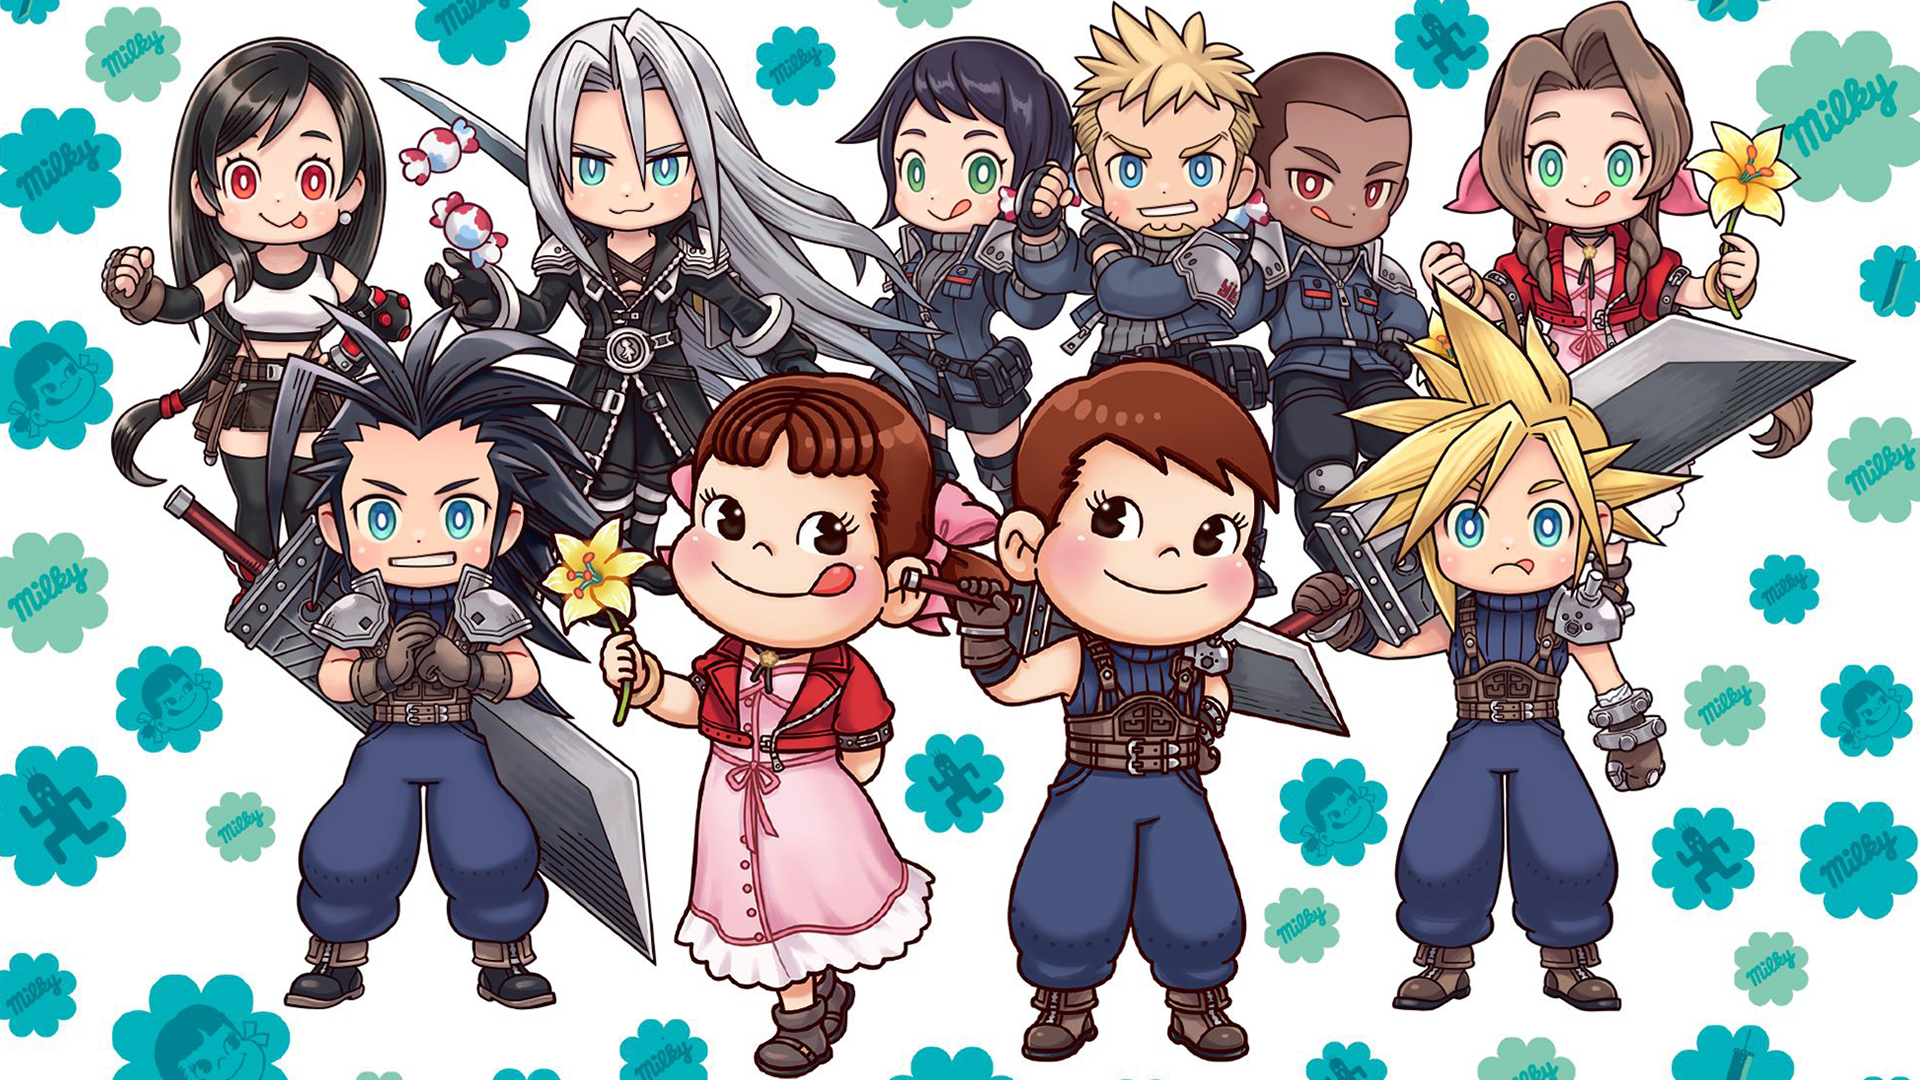 Final Fantasy VII Ever Crisis Announces Collaboration with Fujiya; New Art